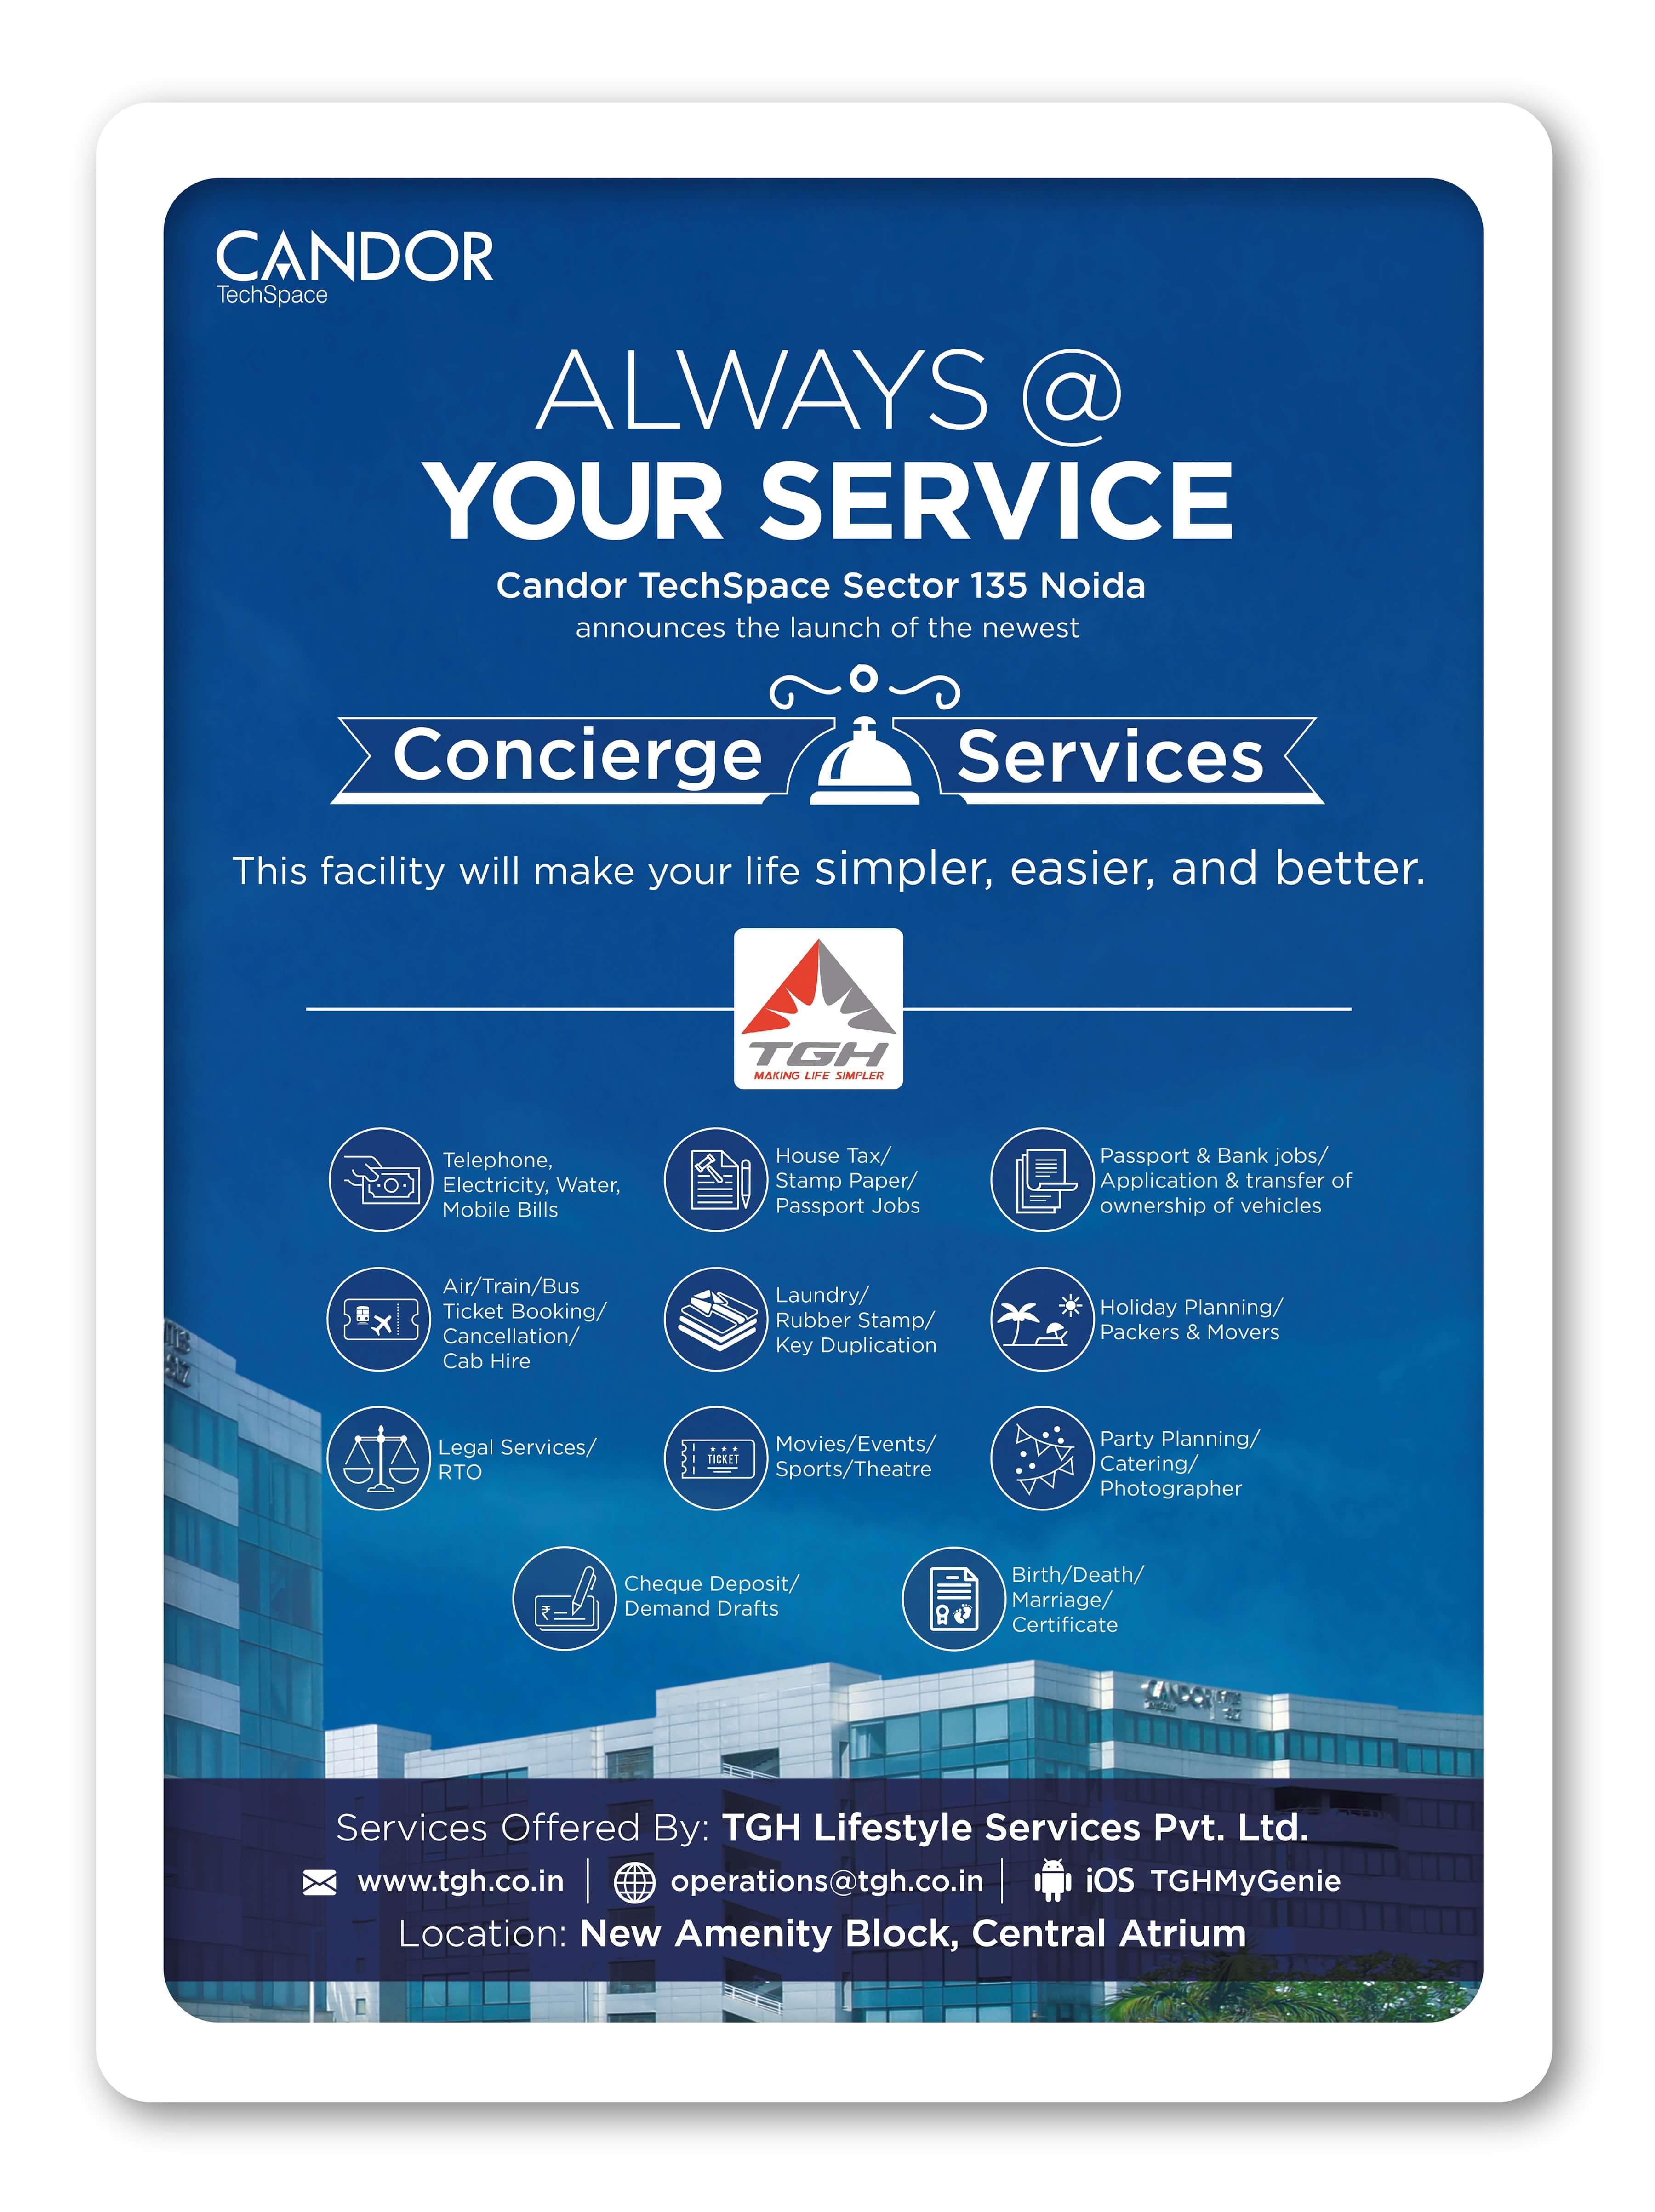 Concierge Service available at Candor TechSpace, Sector-135 Noida